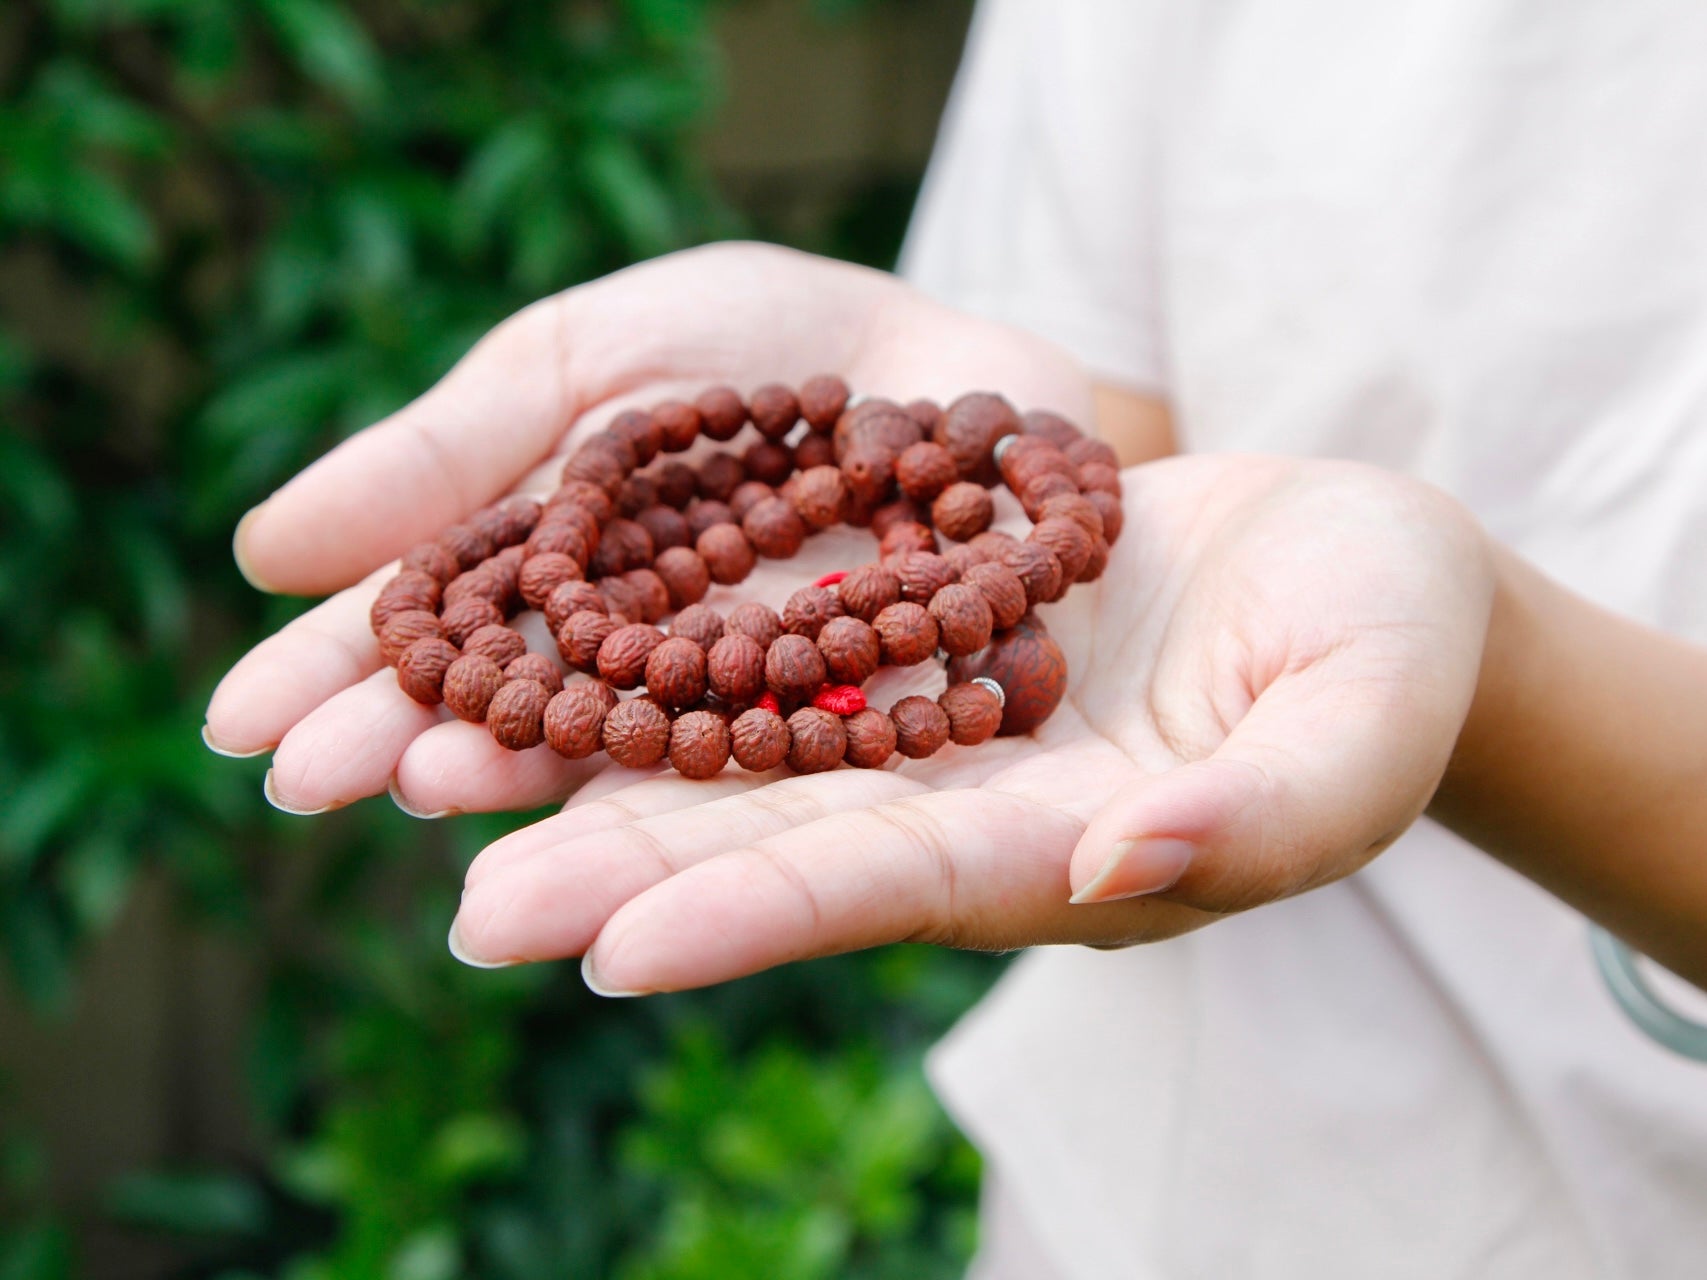 Rakhtu seed mala in palm of hands showing beautiful pattern on beads